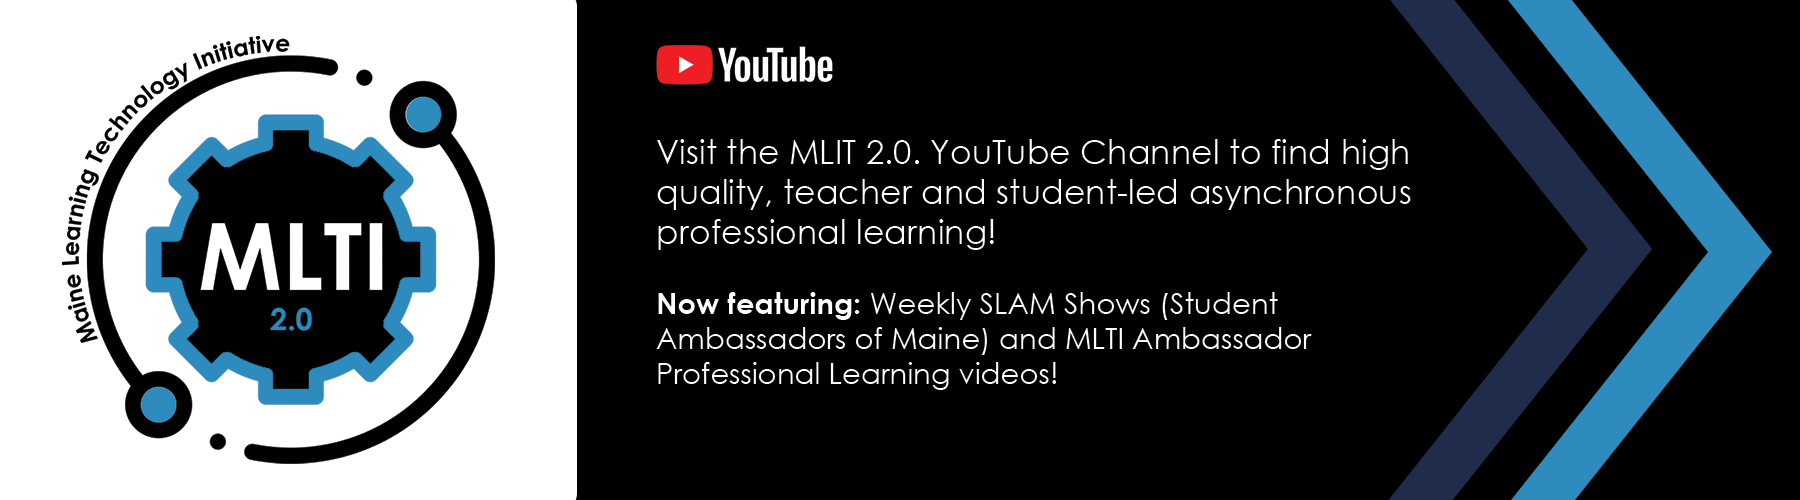 MLTI on YouTube